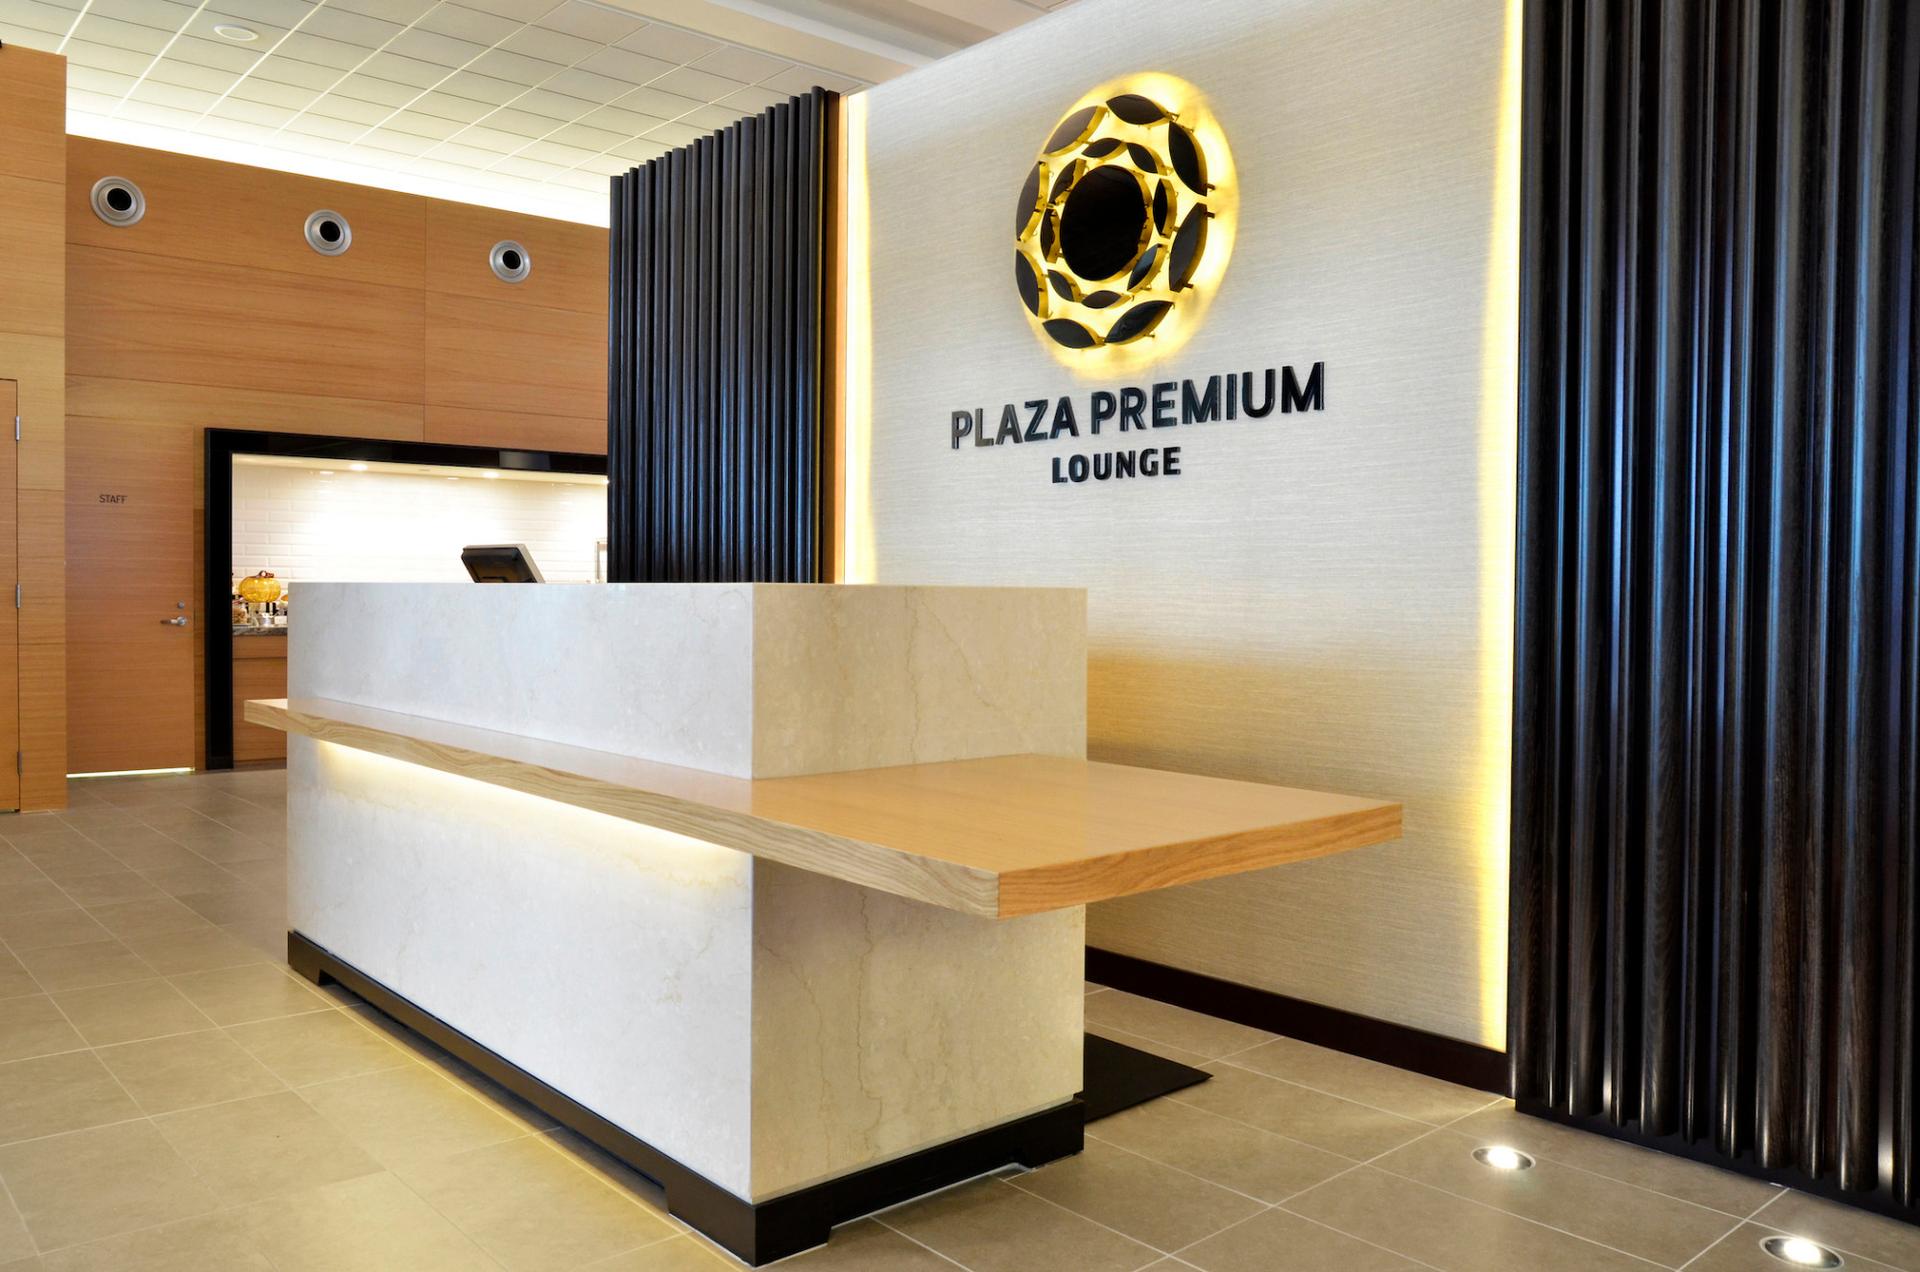 Plaza Premium Lounge image 43 of 45